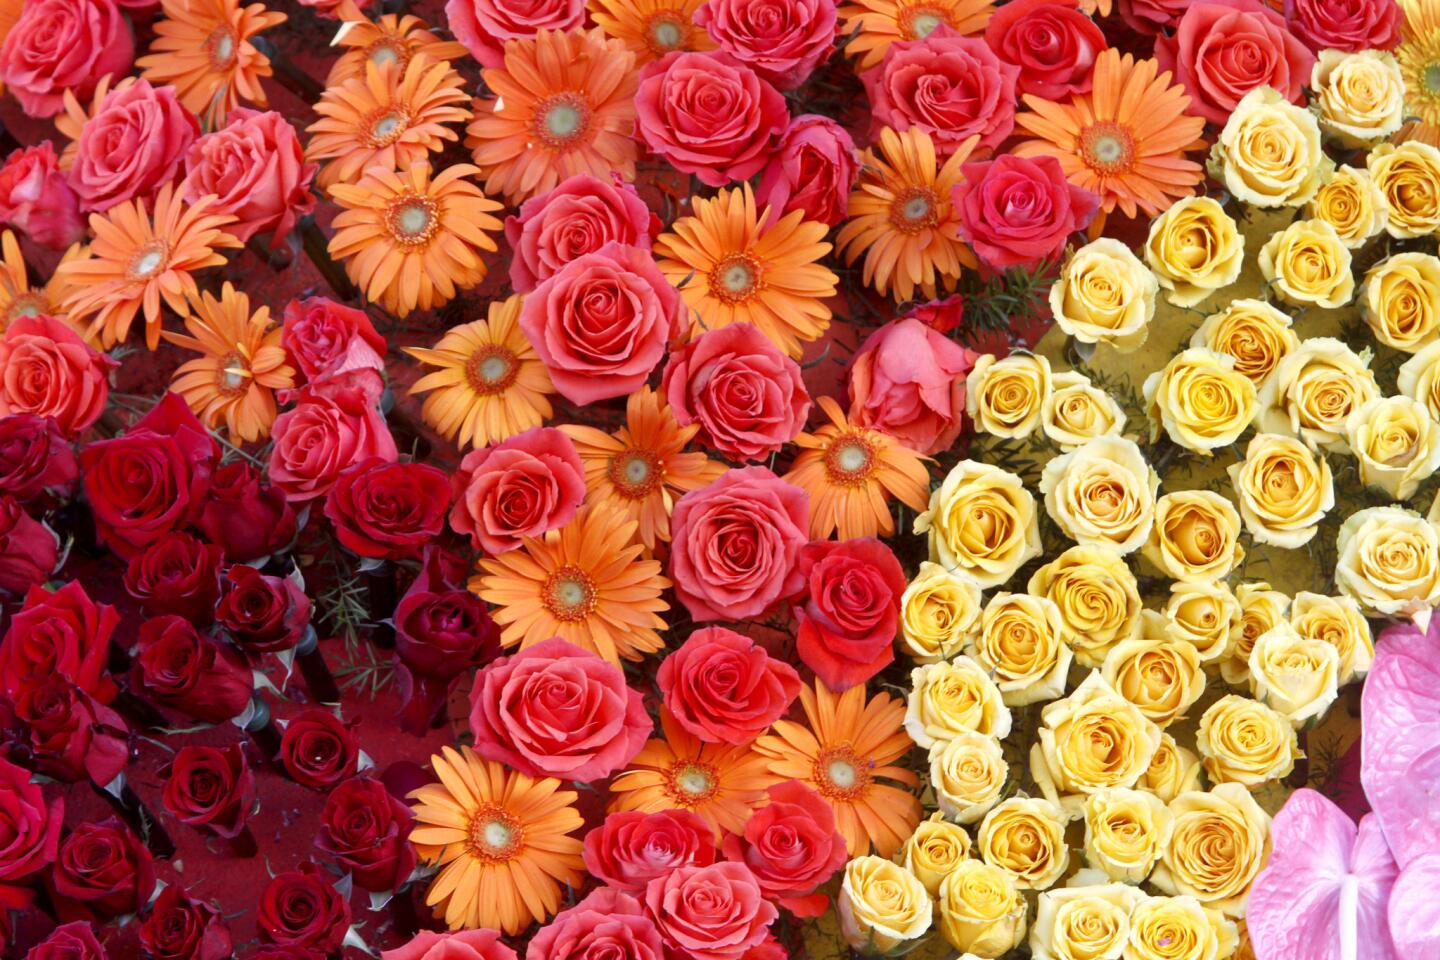 Rose Parade flowers